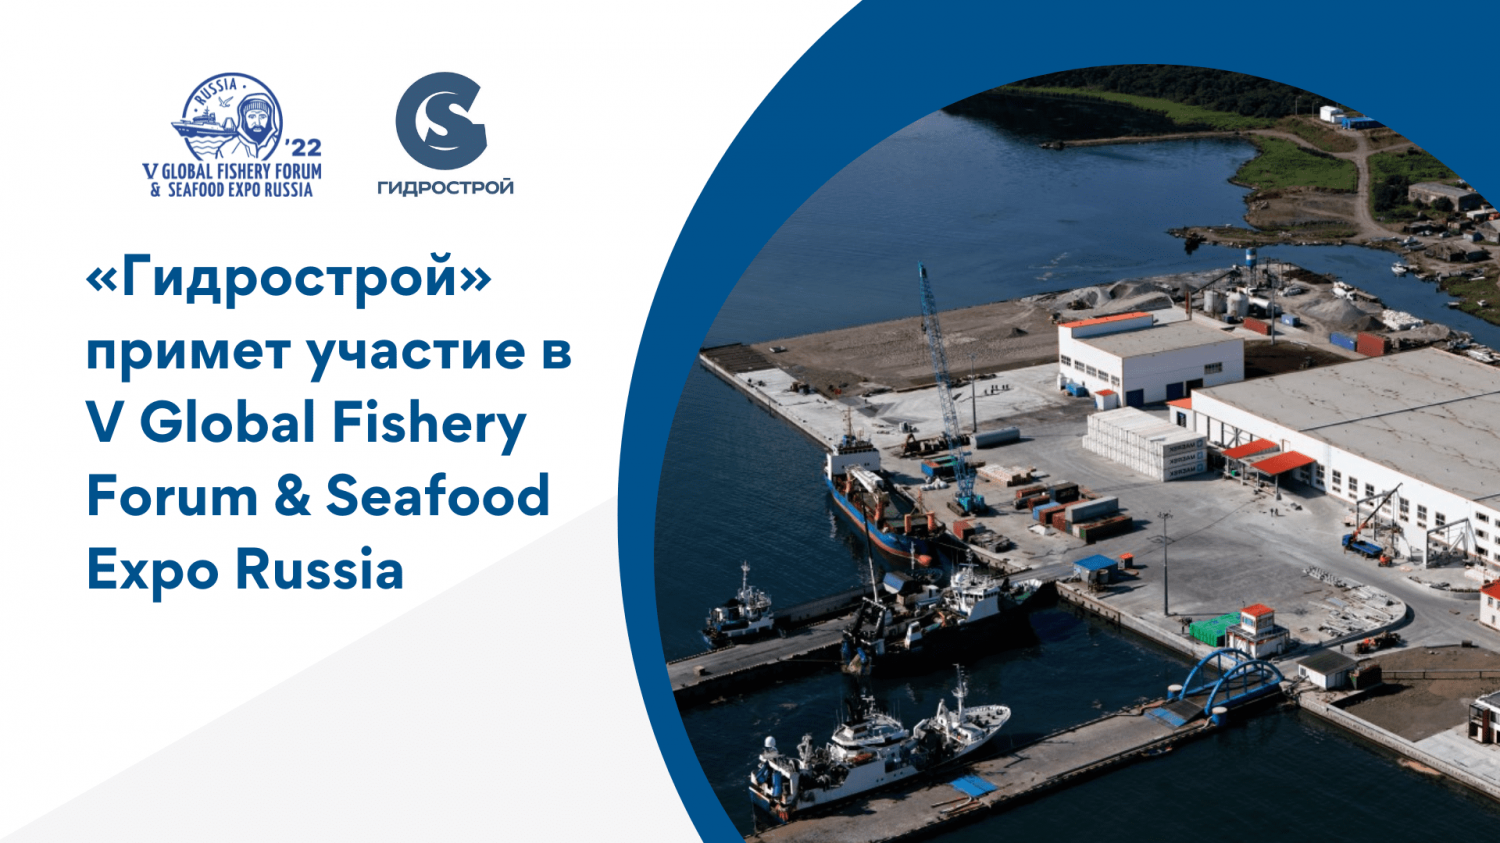 «Гидрострой» примет участие в V Global Fishery Forum & Seafood Expo Russia